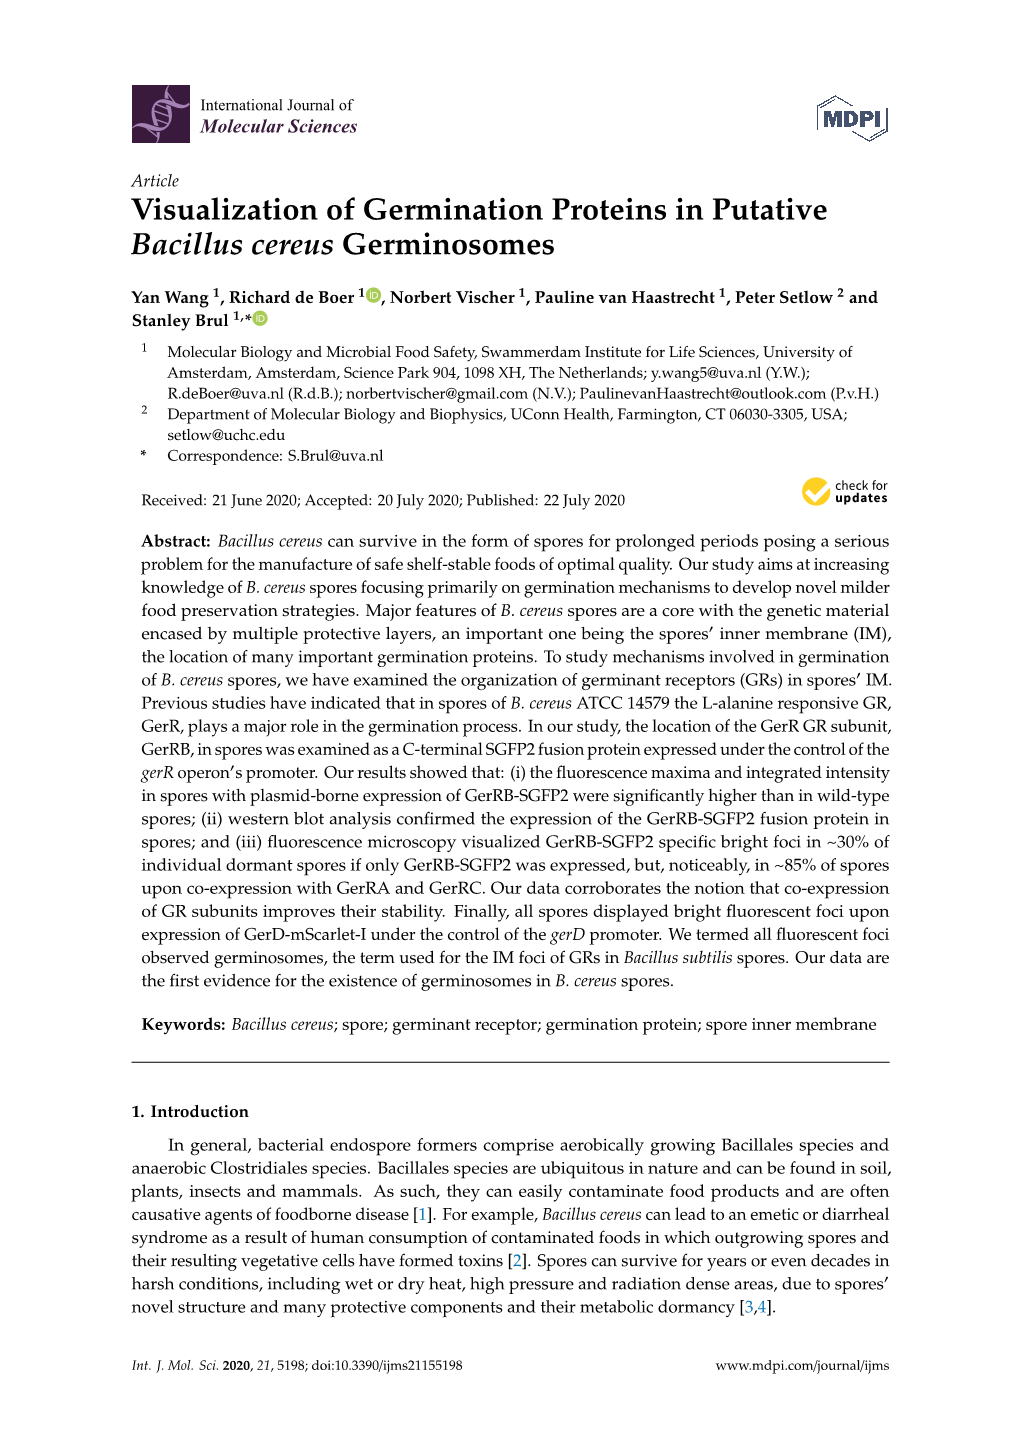 Visualization of Germination Proteins in Putative Bacillus Cereus Germinosomes